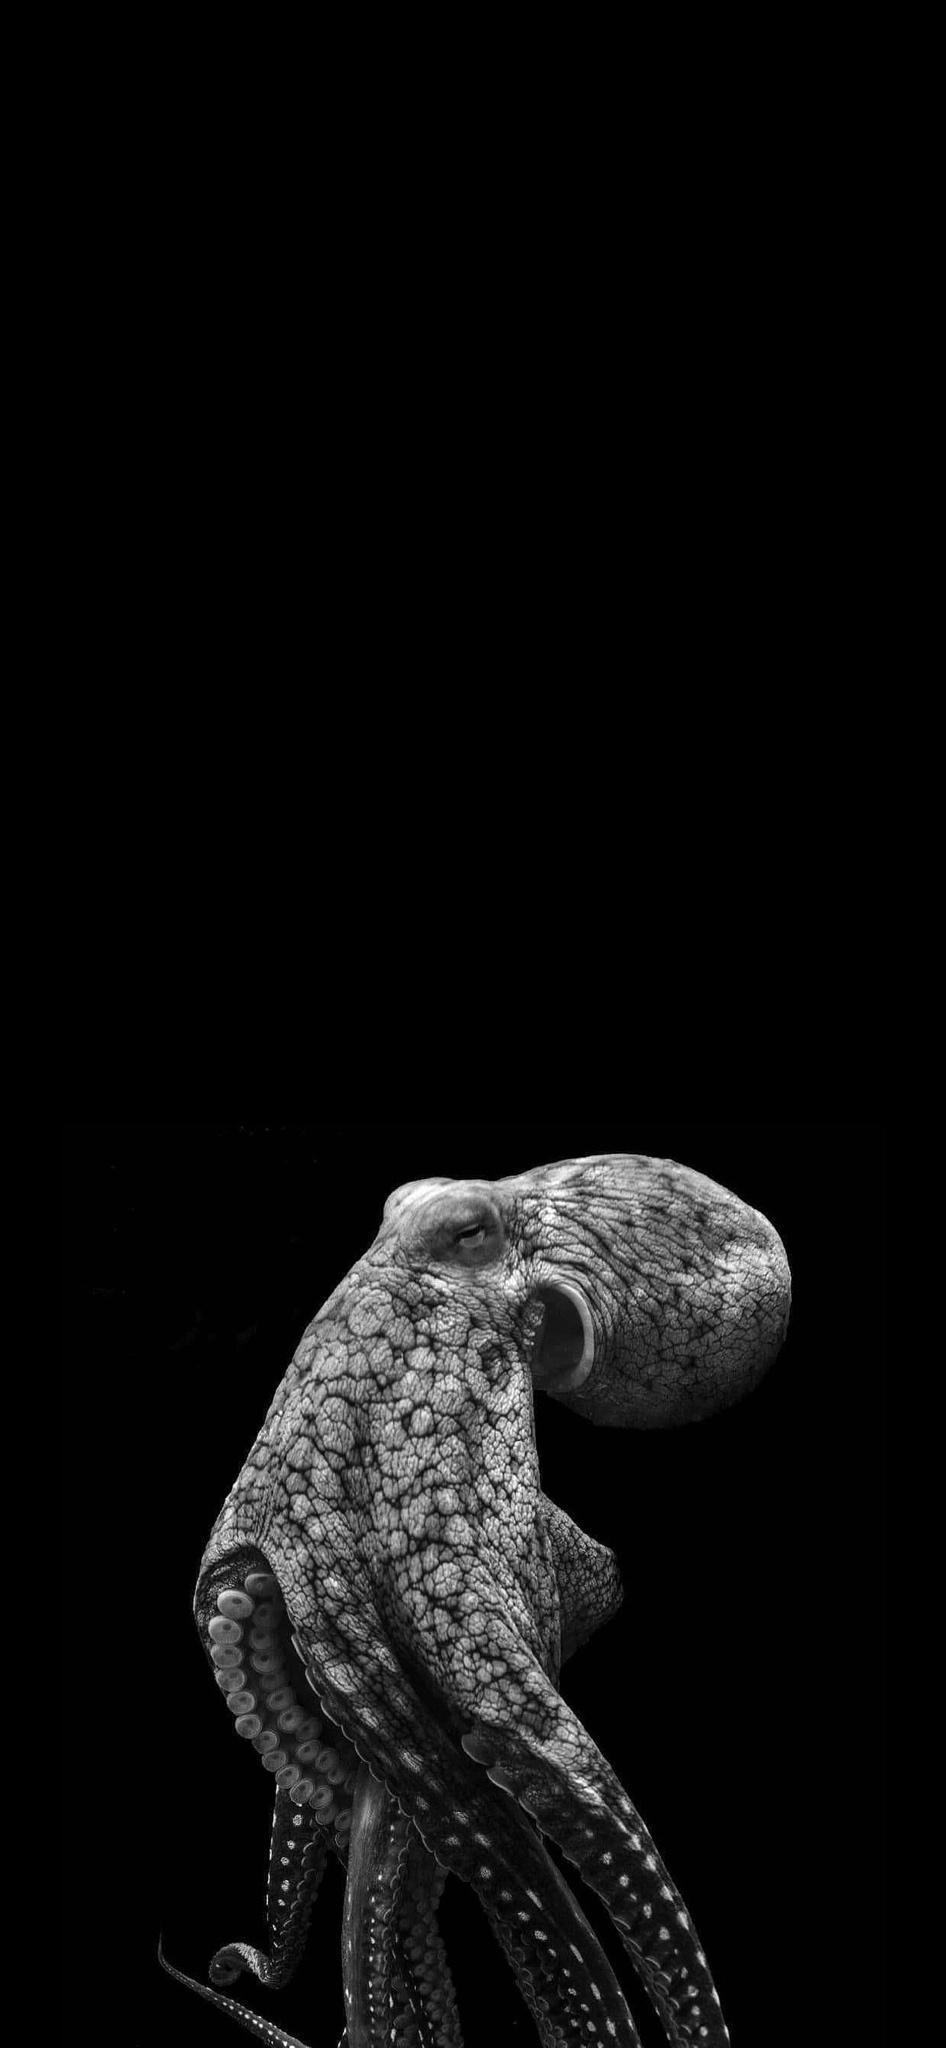 Cephalopod Desktop Wallpaper Hd, Cephalopod, Animal